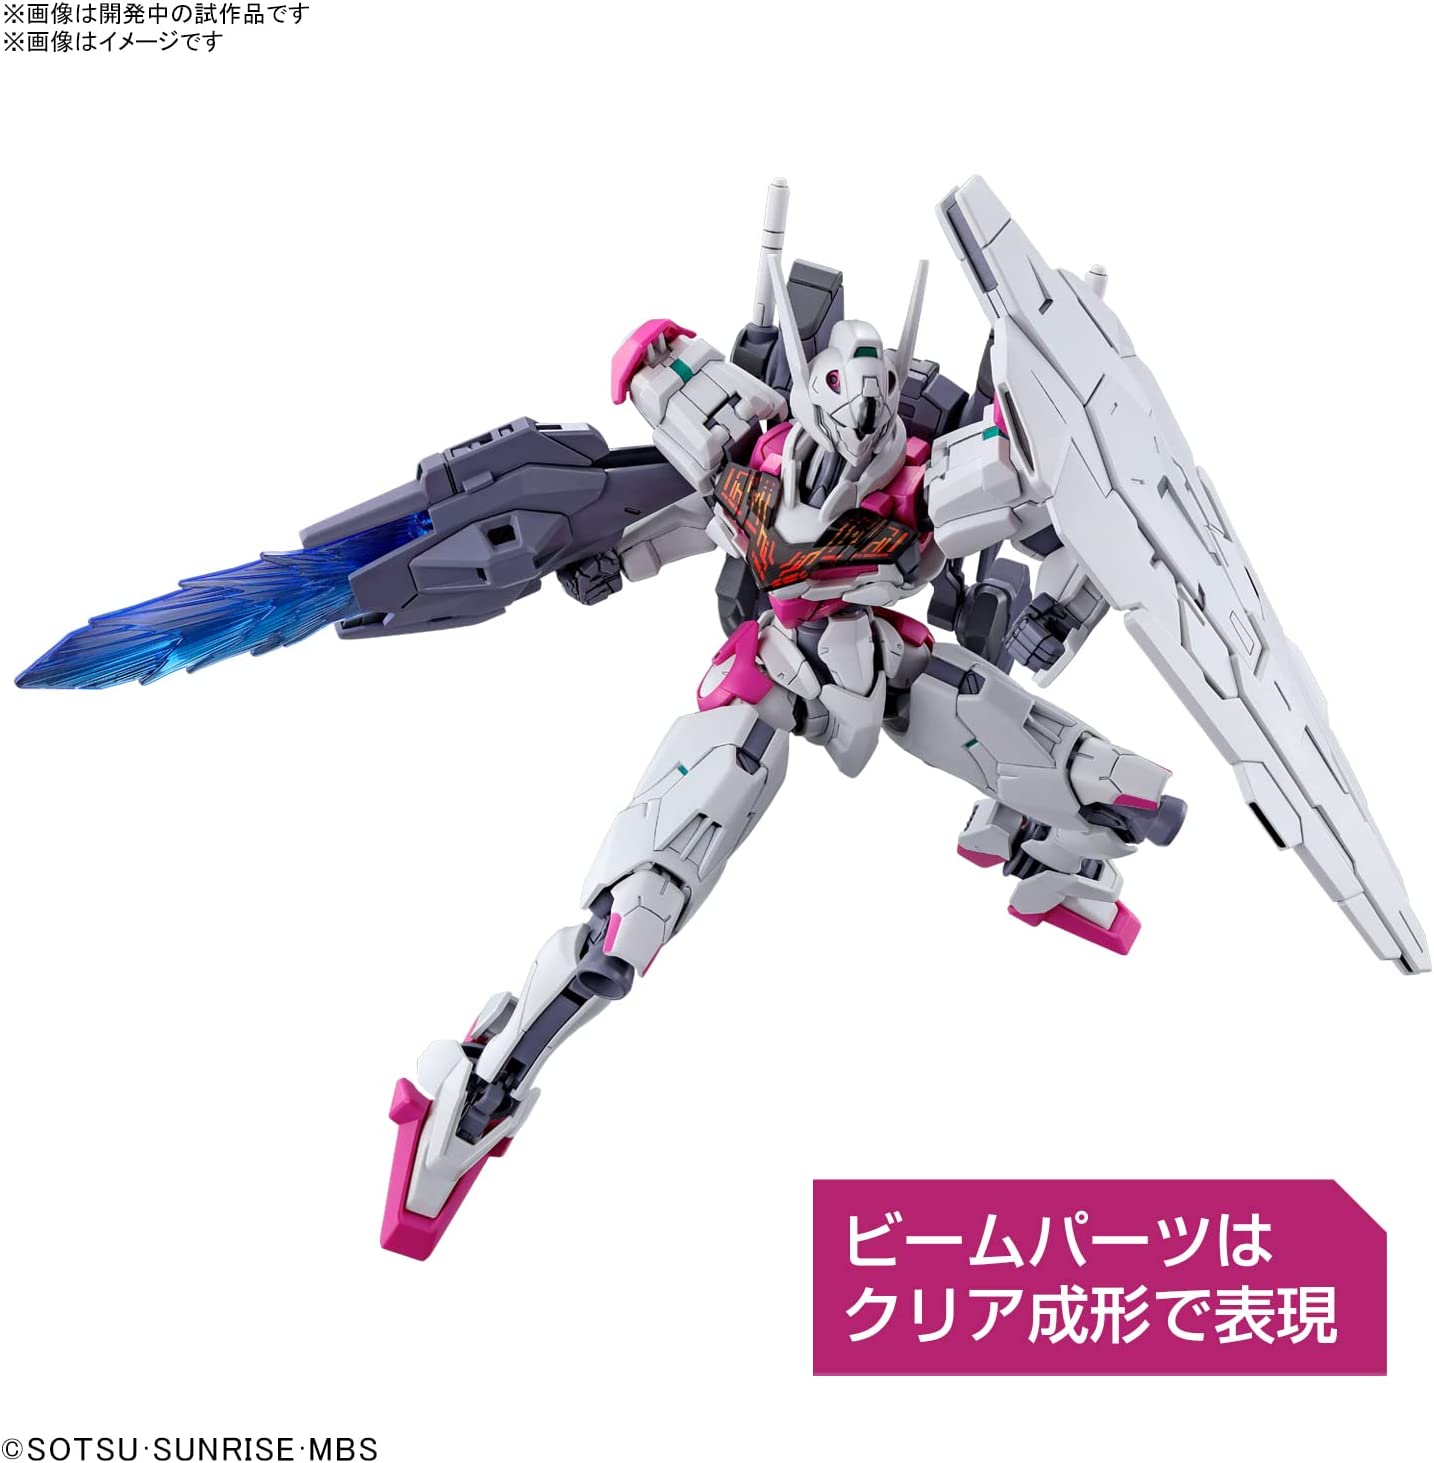 #01 Gundam LFRITH "La bruja de Mercury", Kit de modelo Bandai Spirits Hobby HG 1/144